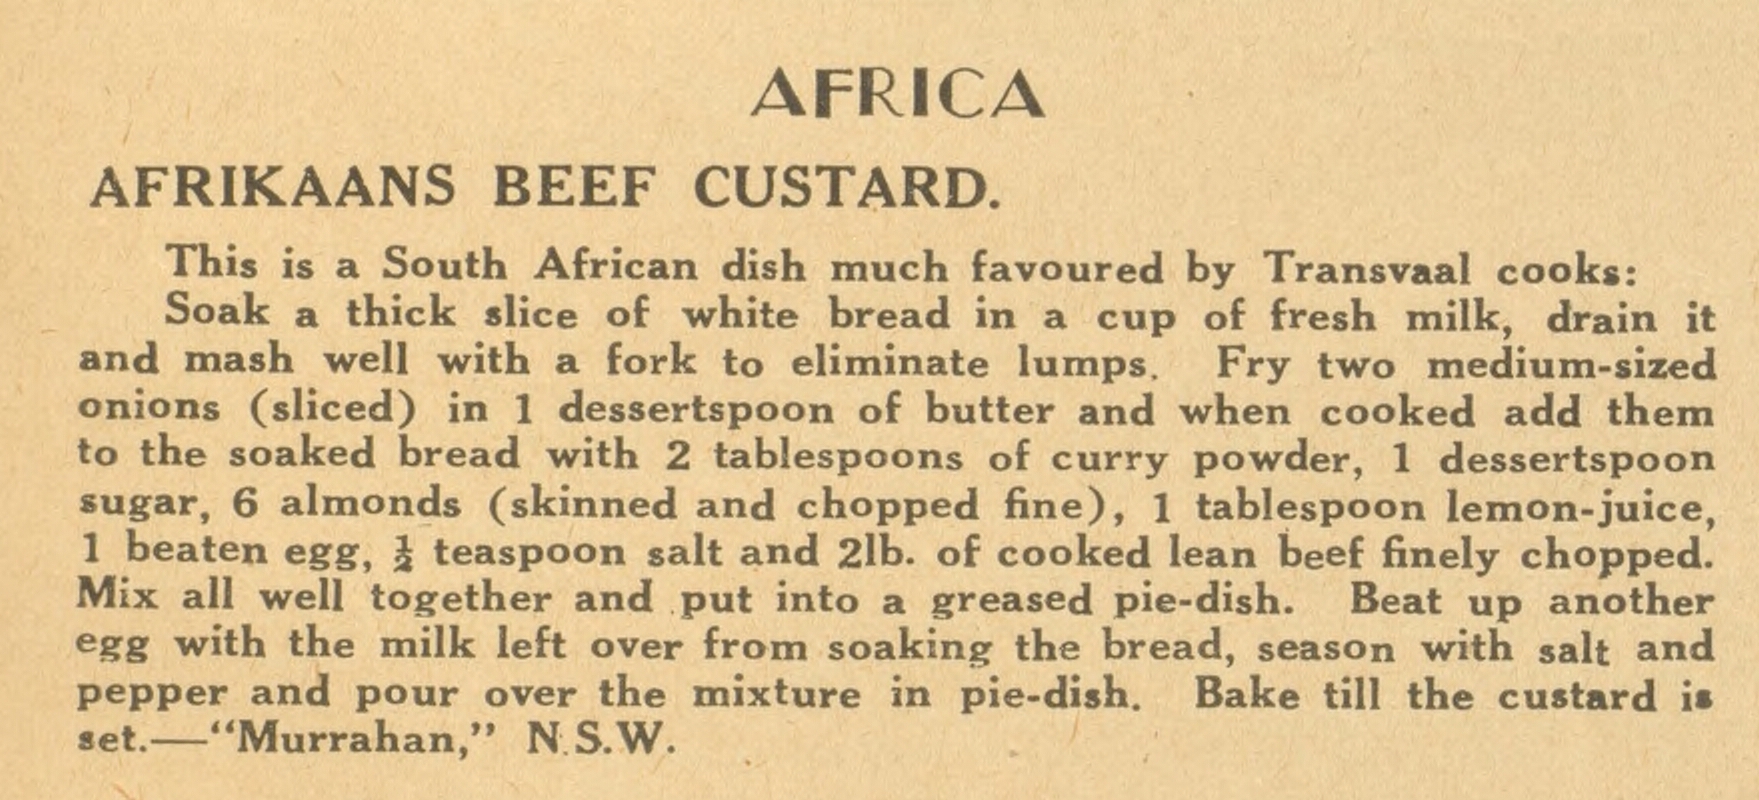 A recipe for Afrikaans Beef Custard. 